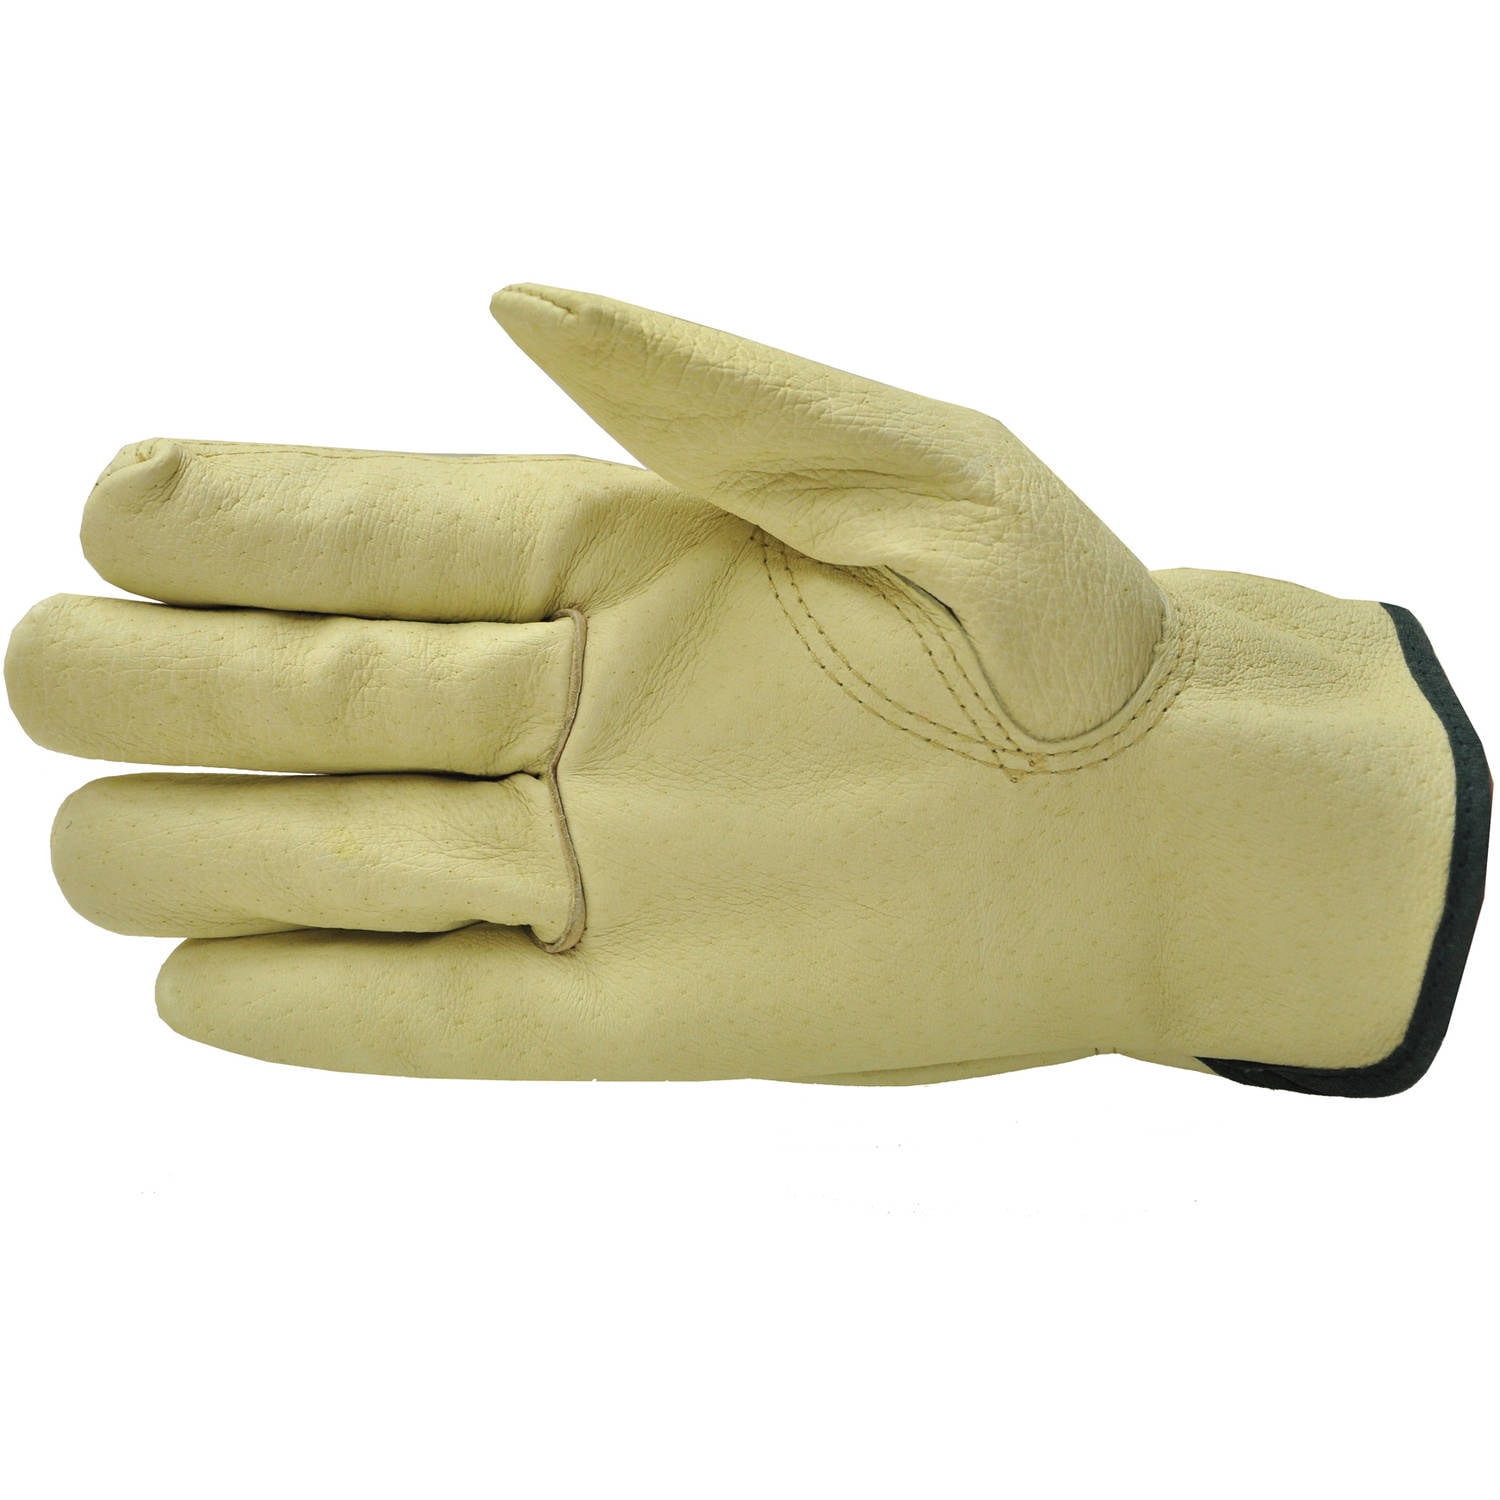 G & F Grain Pigskin Leather Work Gloves, Medium, 3 Pairs, Yellow